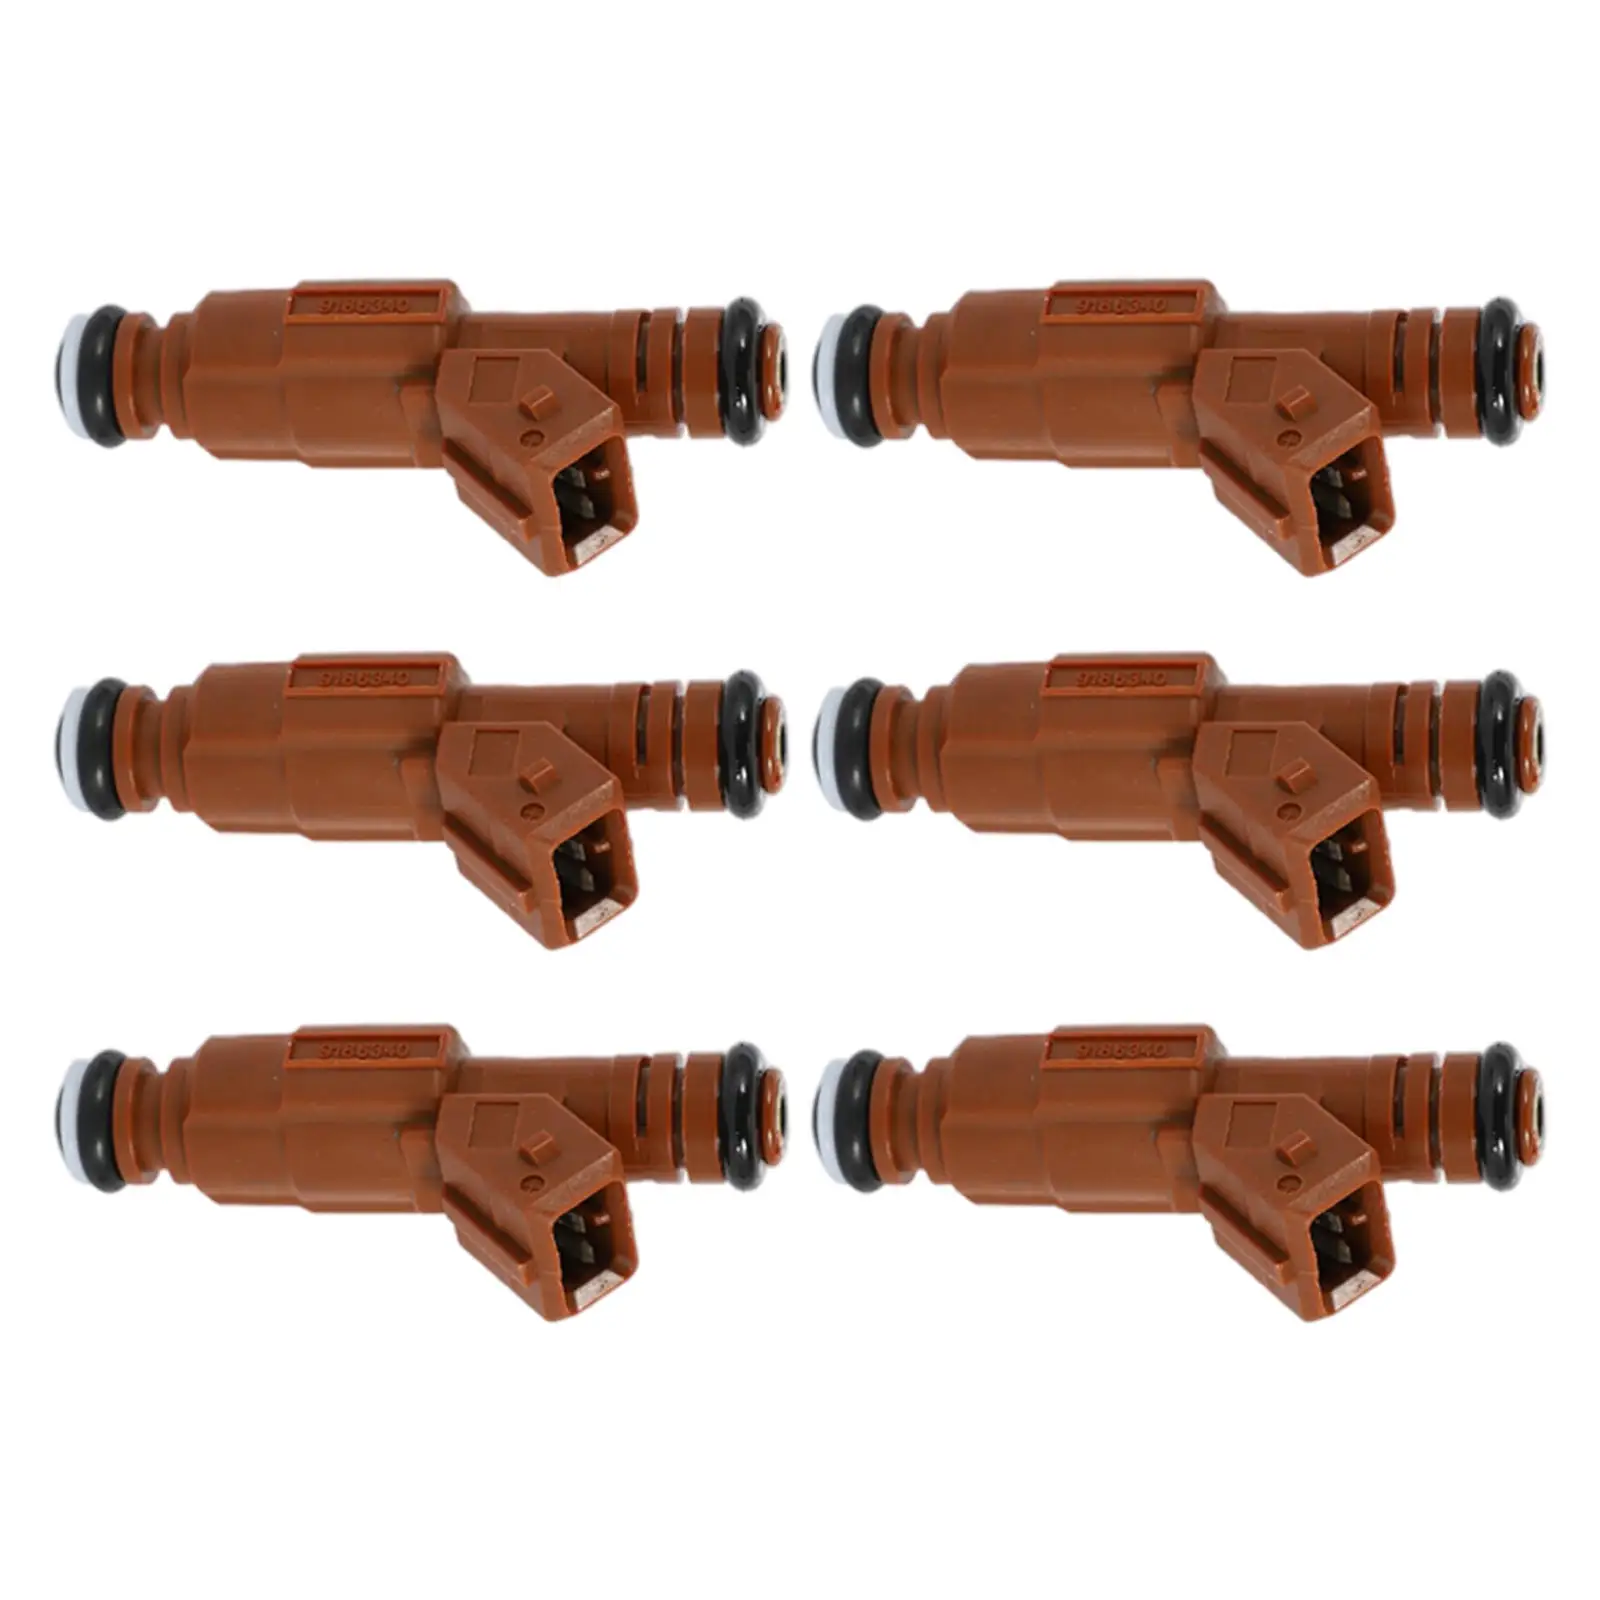 6 Pieces Fuel Injectors XC70 2.5L XC90 2.5L Replacement Parts Fit for Volvo 0280155831